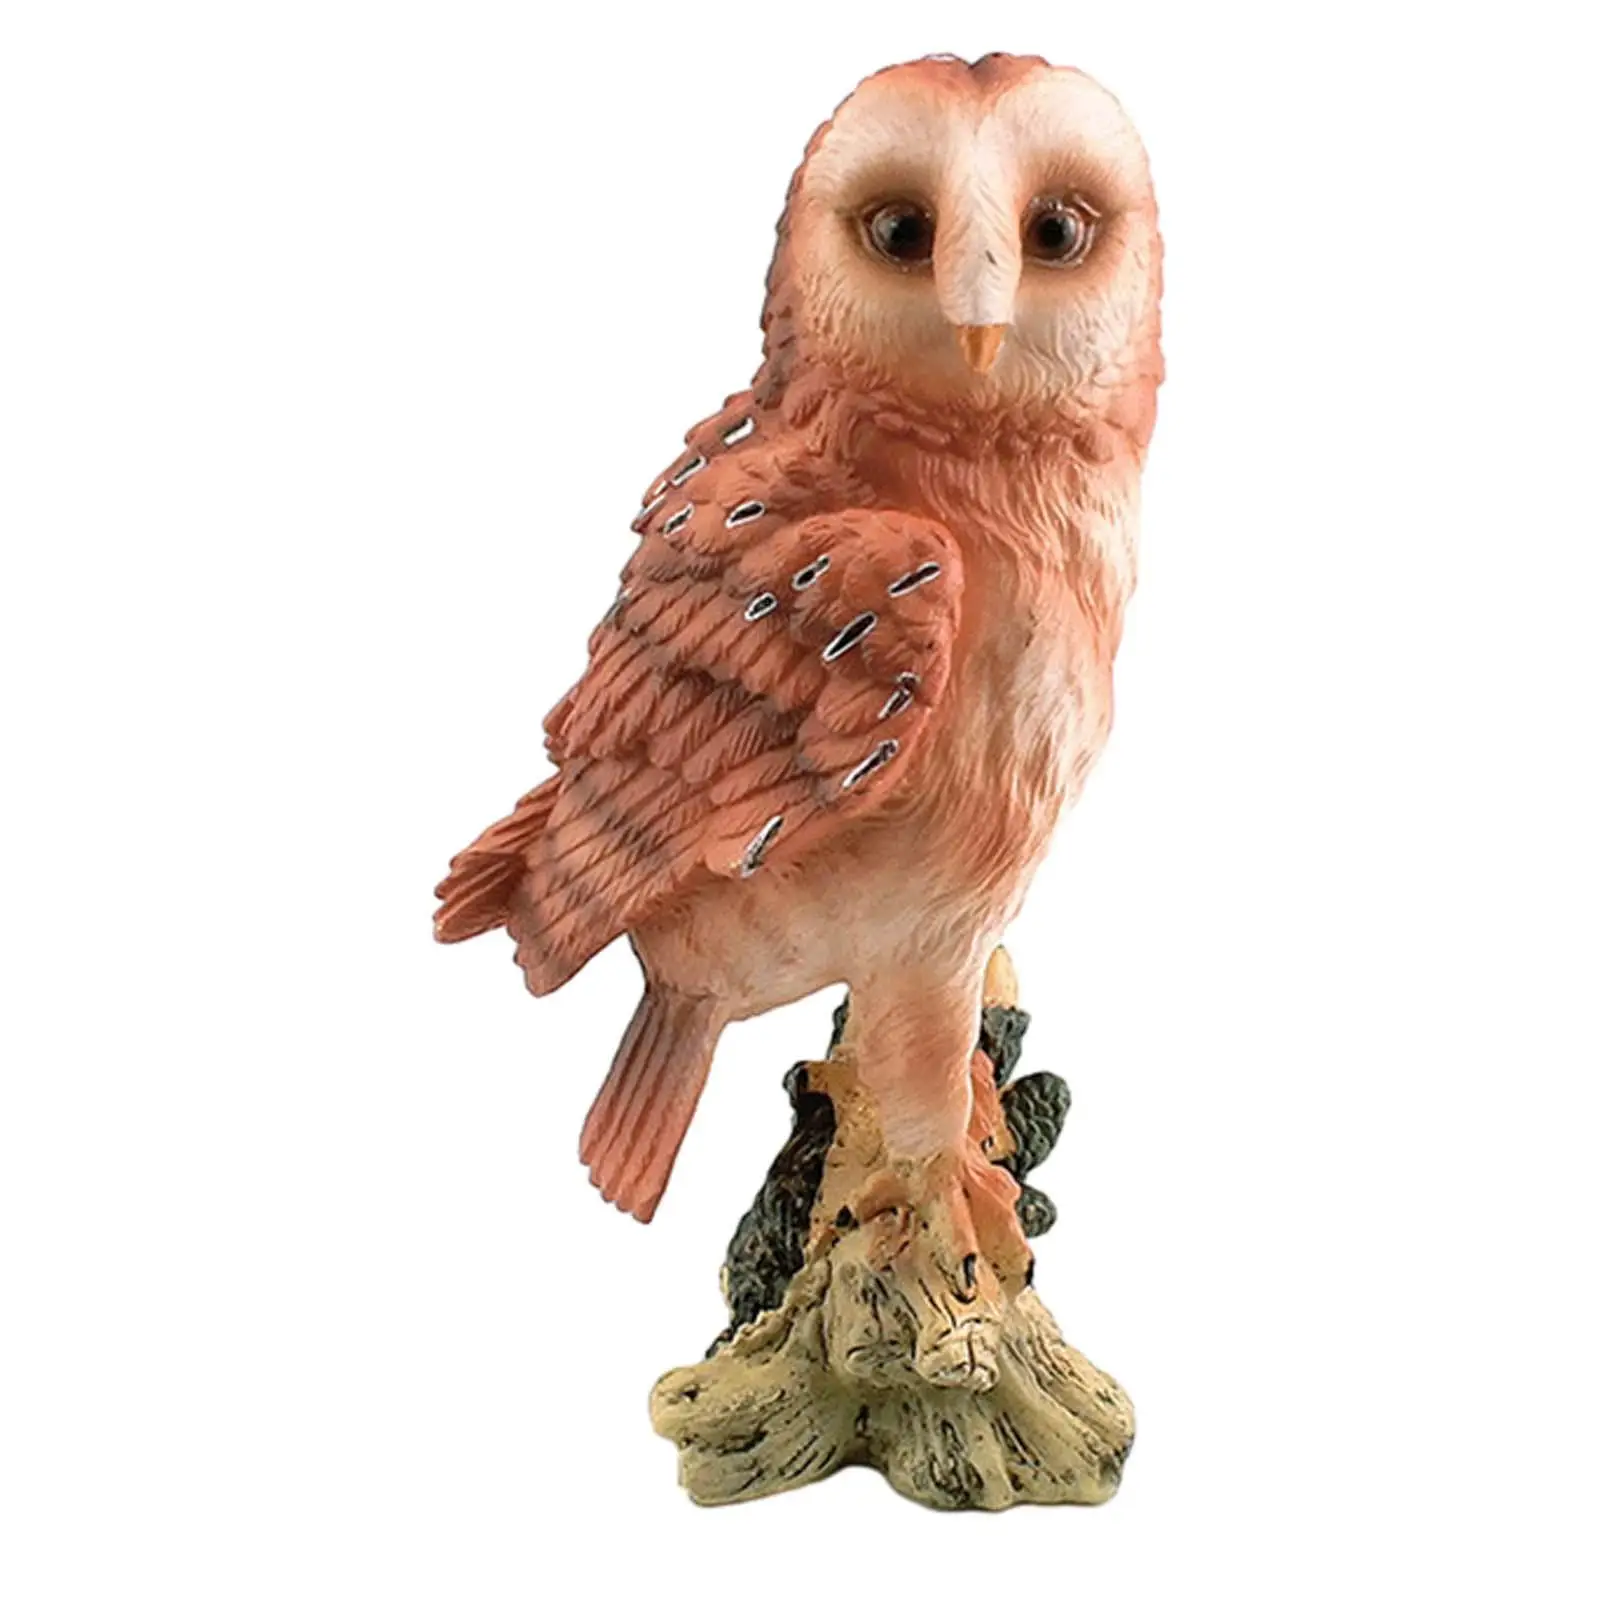 Simulation Owl Model Desktop Decor Owl Statue Sculptures for Decor Ornaments Desktop Decoration Educational Teaching Materials